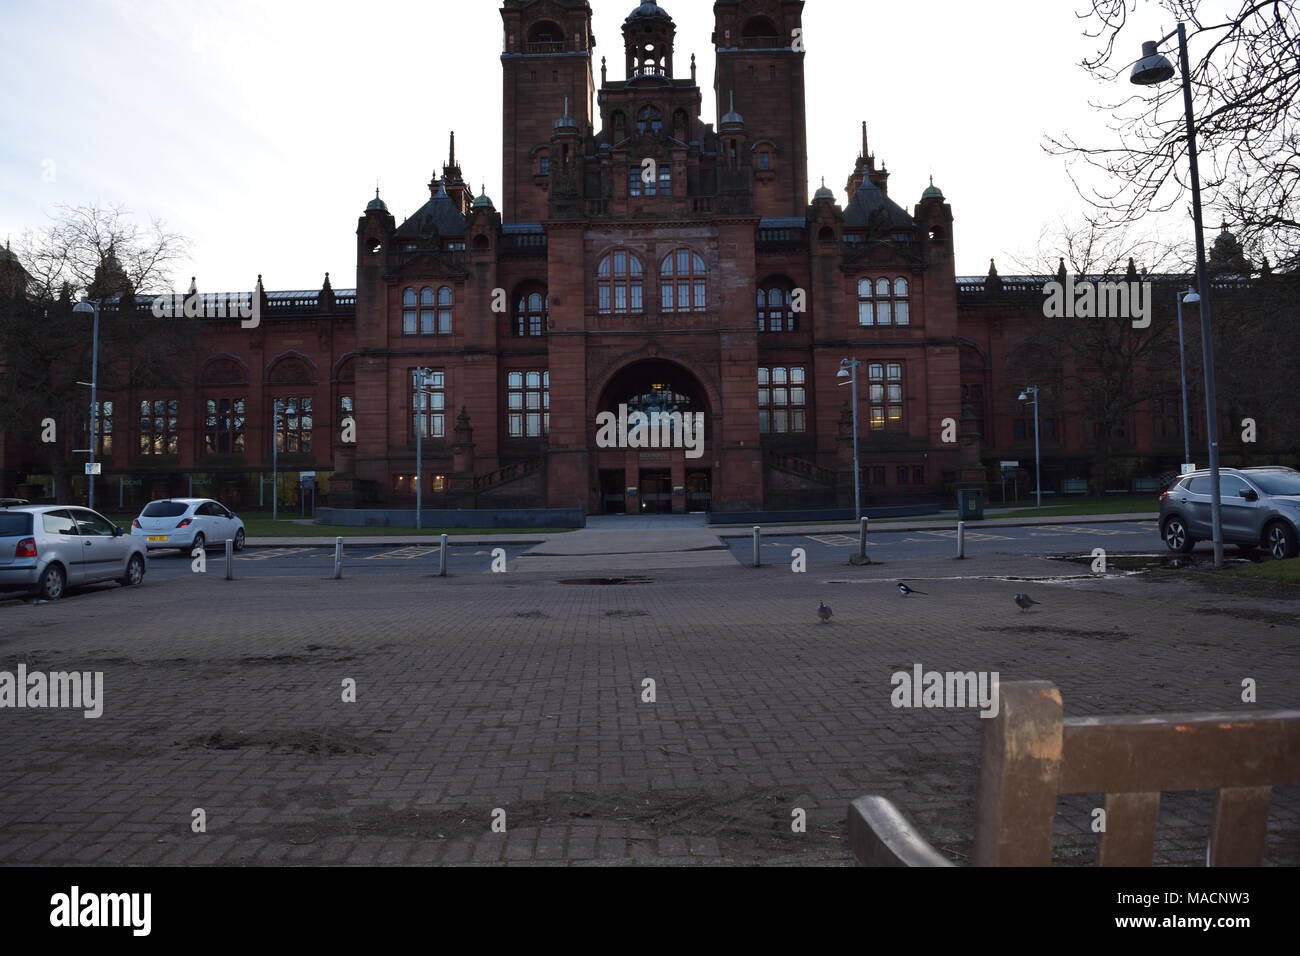 "Glasgow" "Glasgow university view from the kelvin hall" "Scotland". Stock Photo